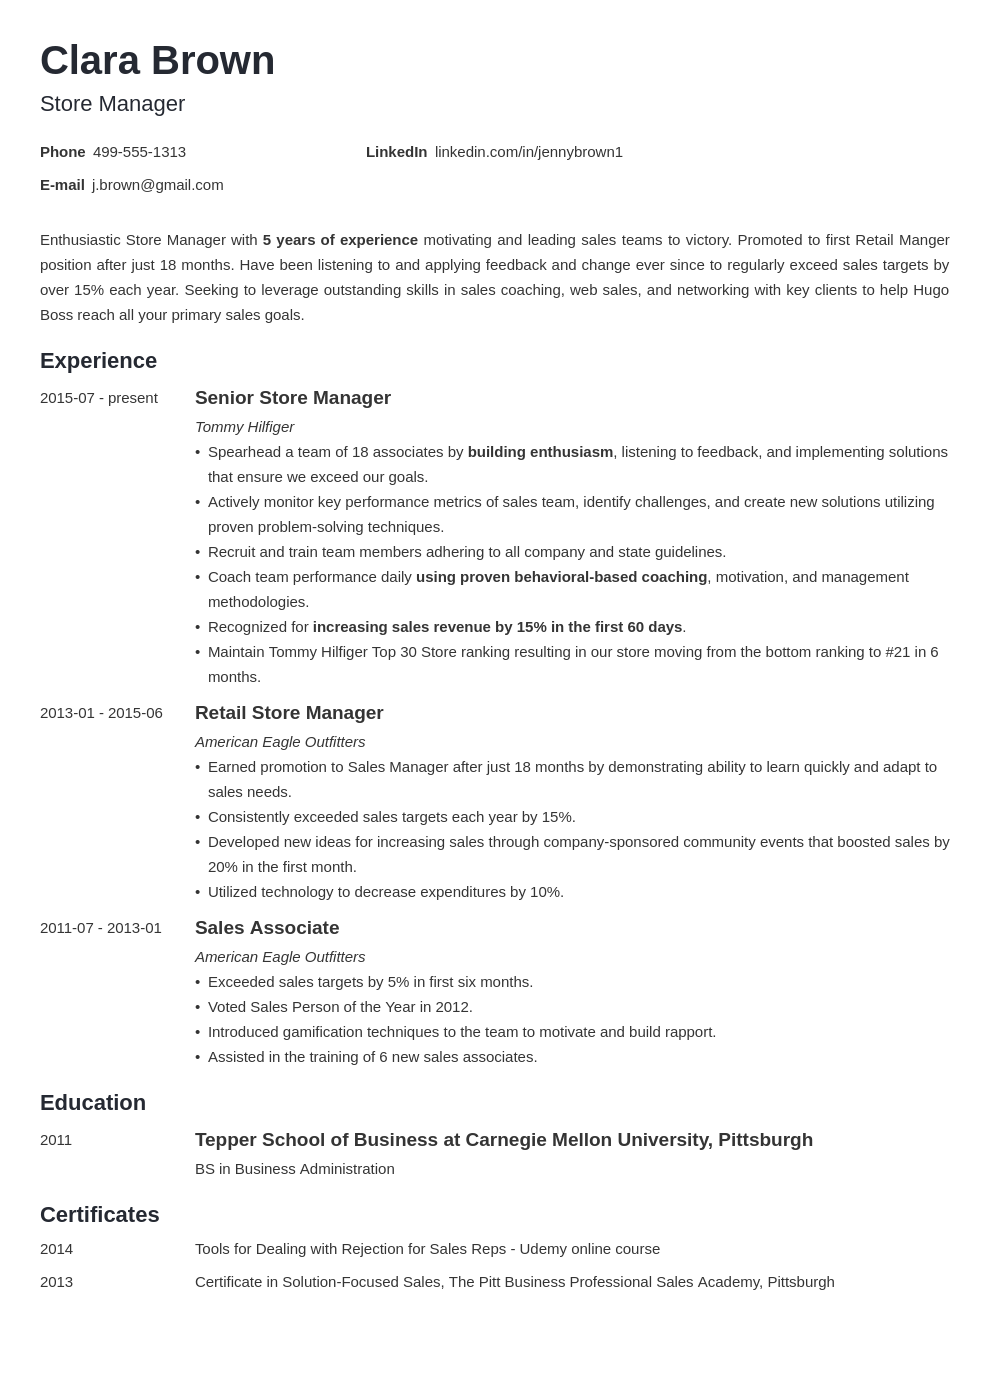 store-manager-resume-examples-job-description-skills